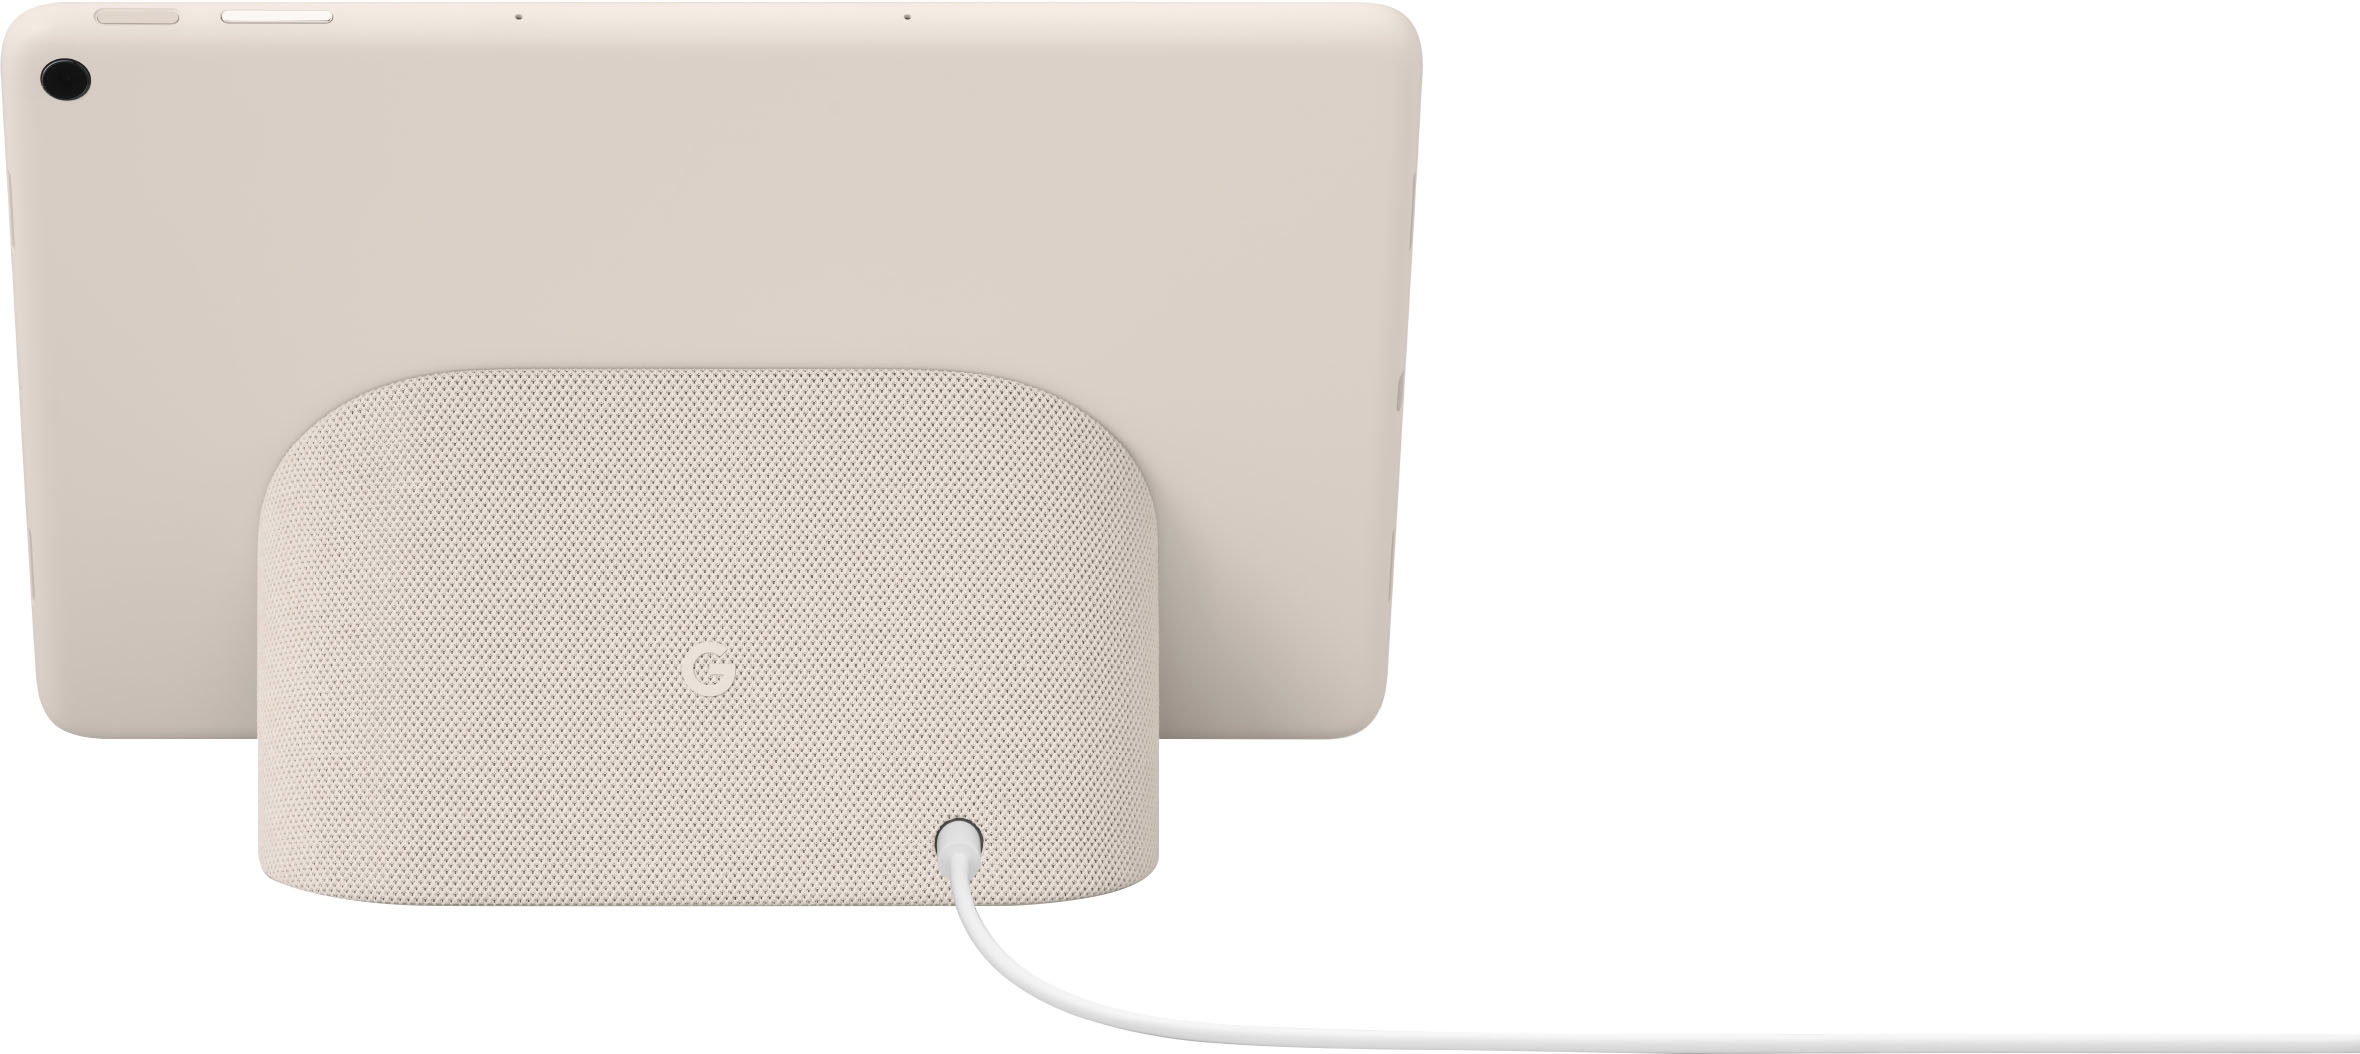 Google Pixel Tablet with Speaker Porcelain Charging Wi-Fi Tablet - Best GA04750-US 128GB Buy Android Dock 11